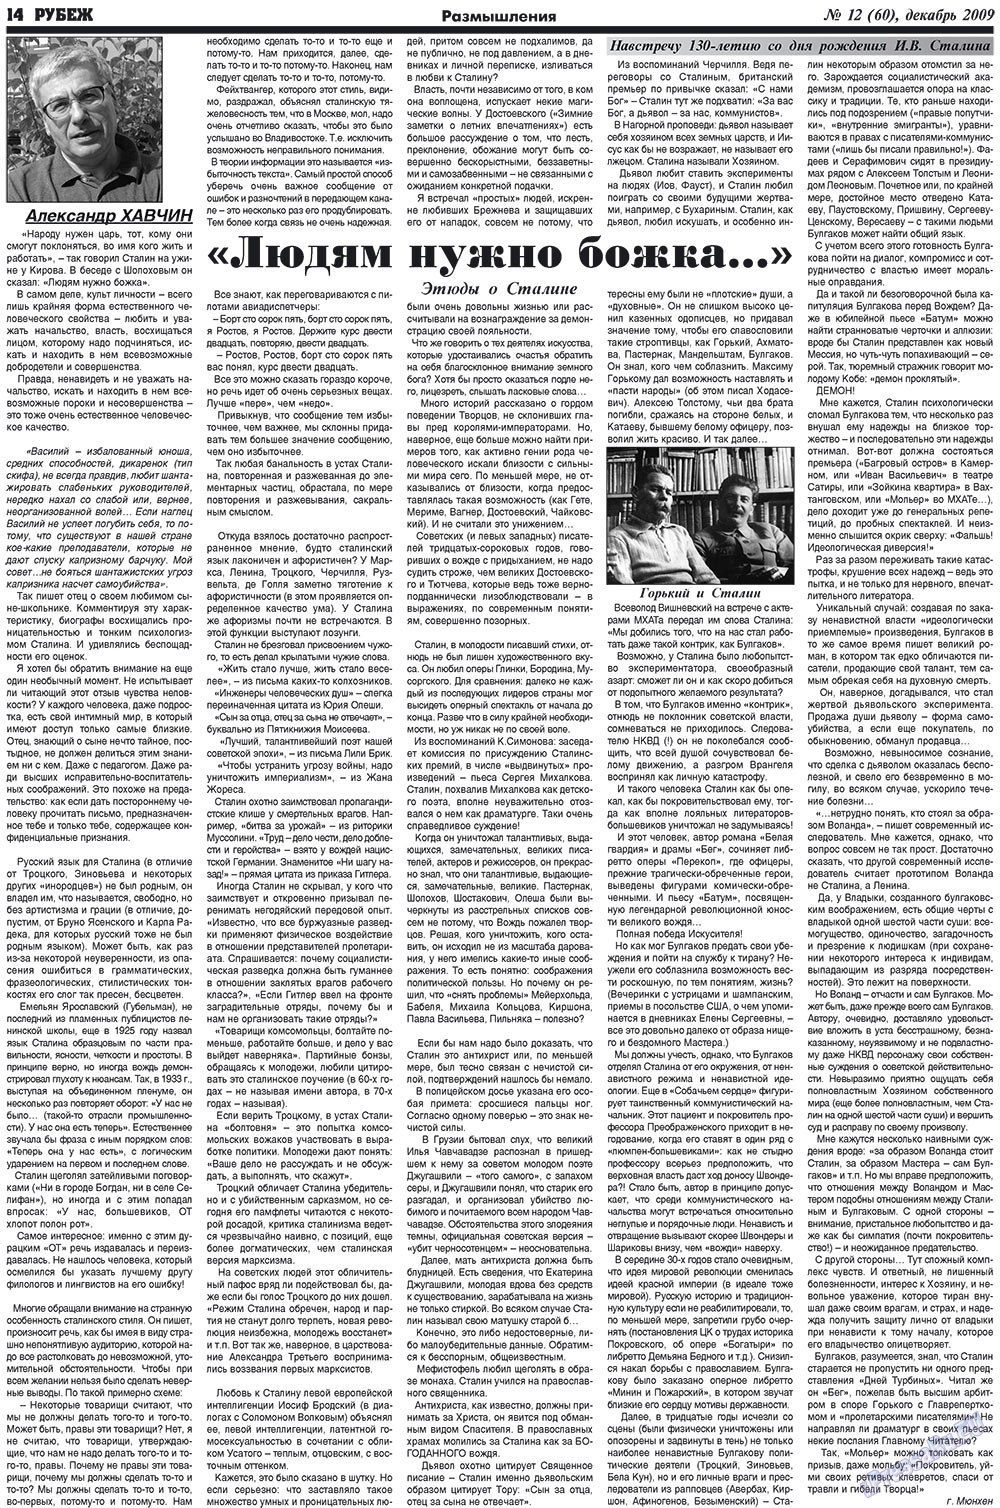 Рубеж, газета. 2009 №12 стр.14